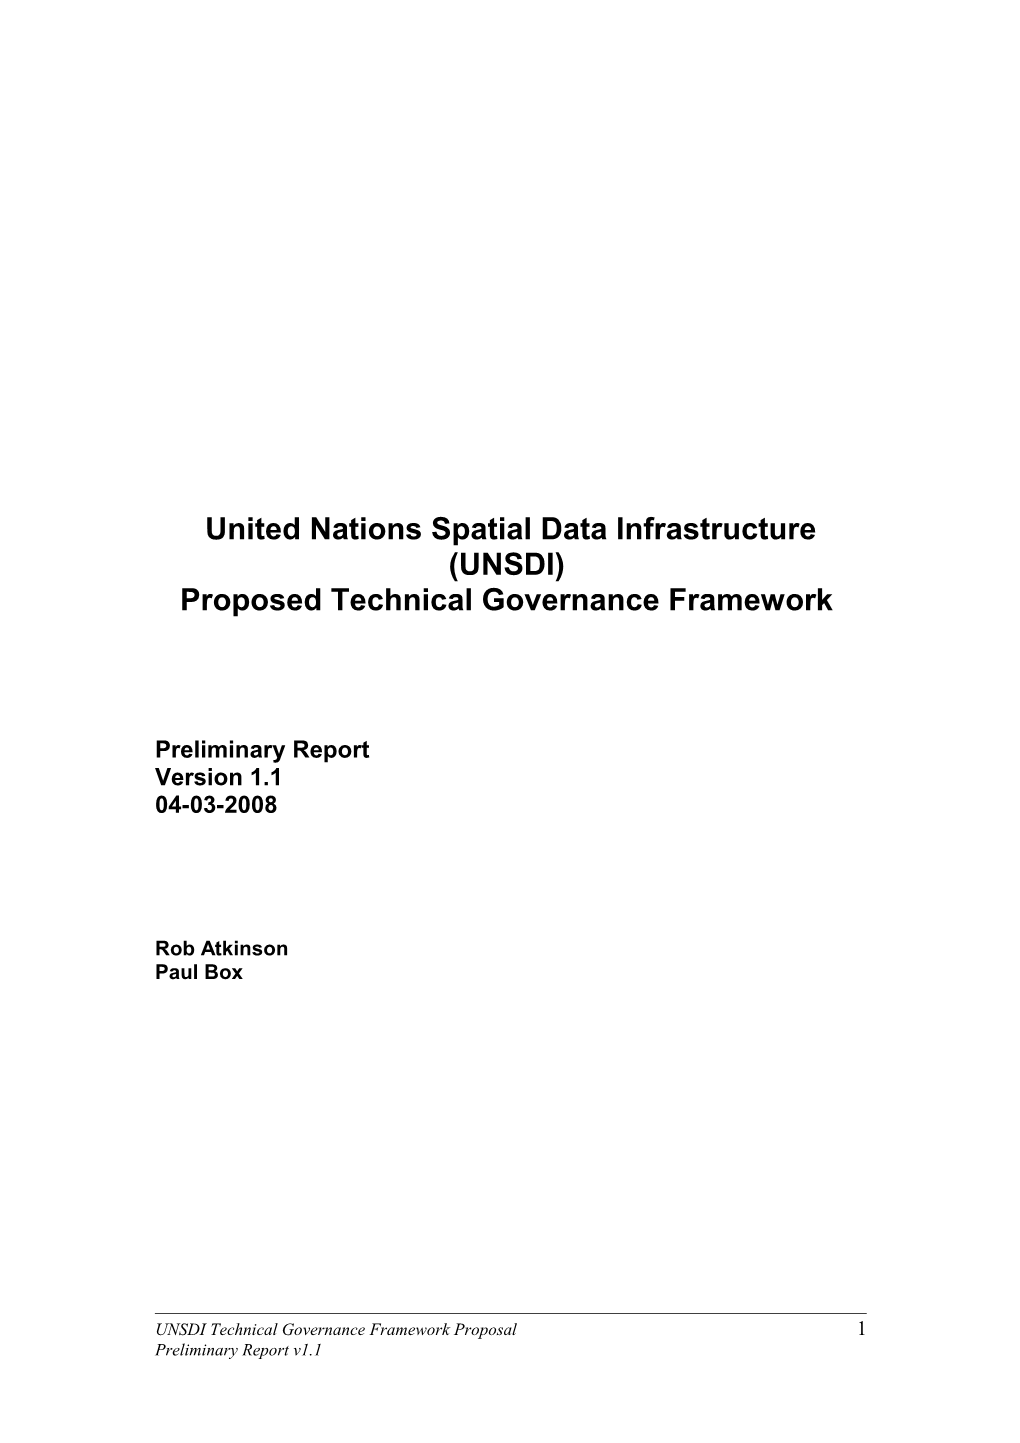 UNSDI Technical Governance Framework